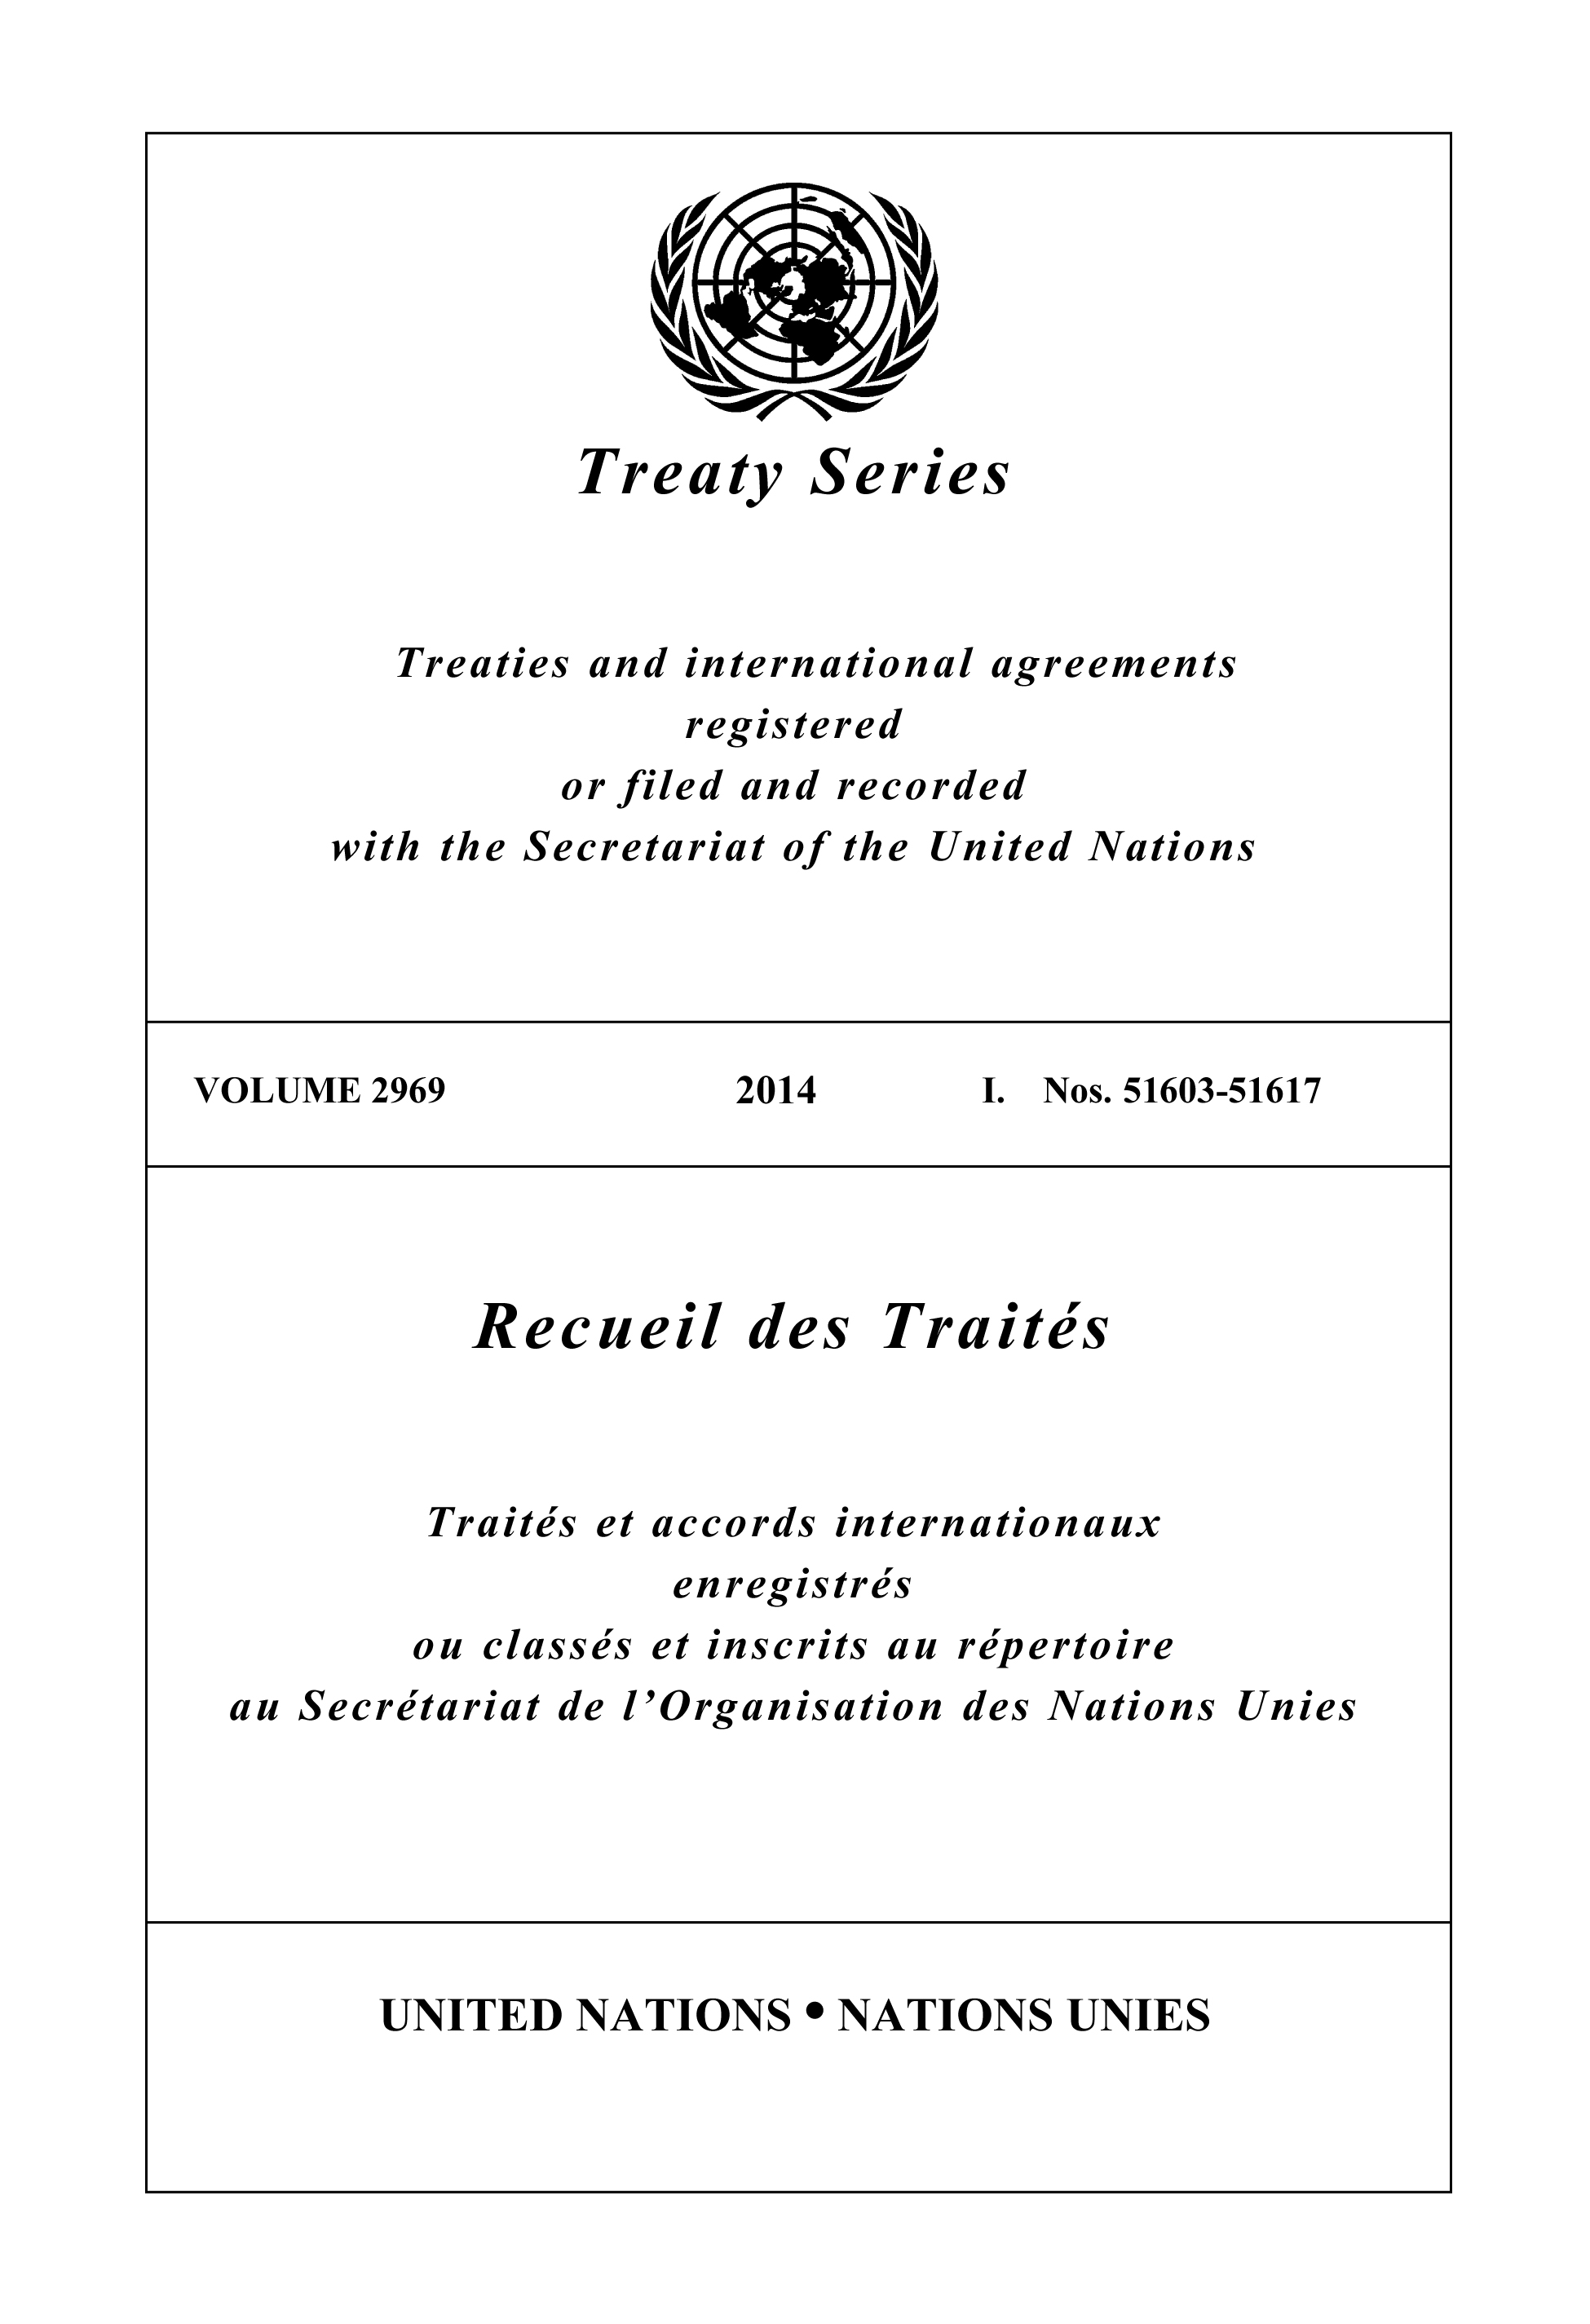 image of Treaty Series 2969